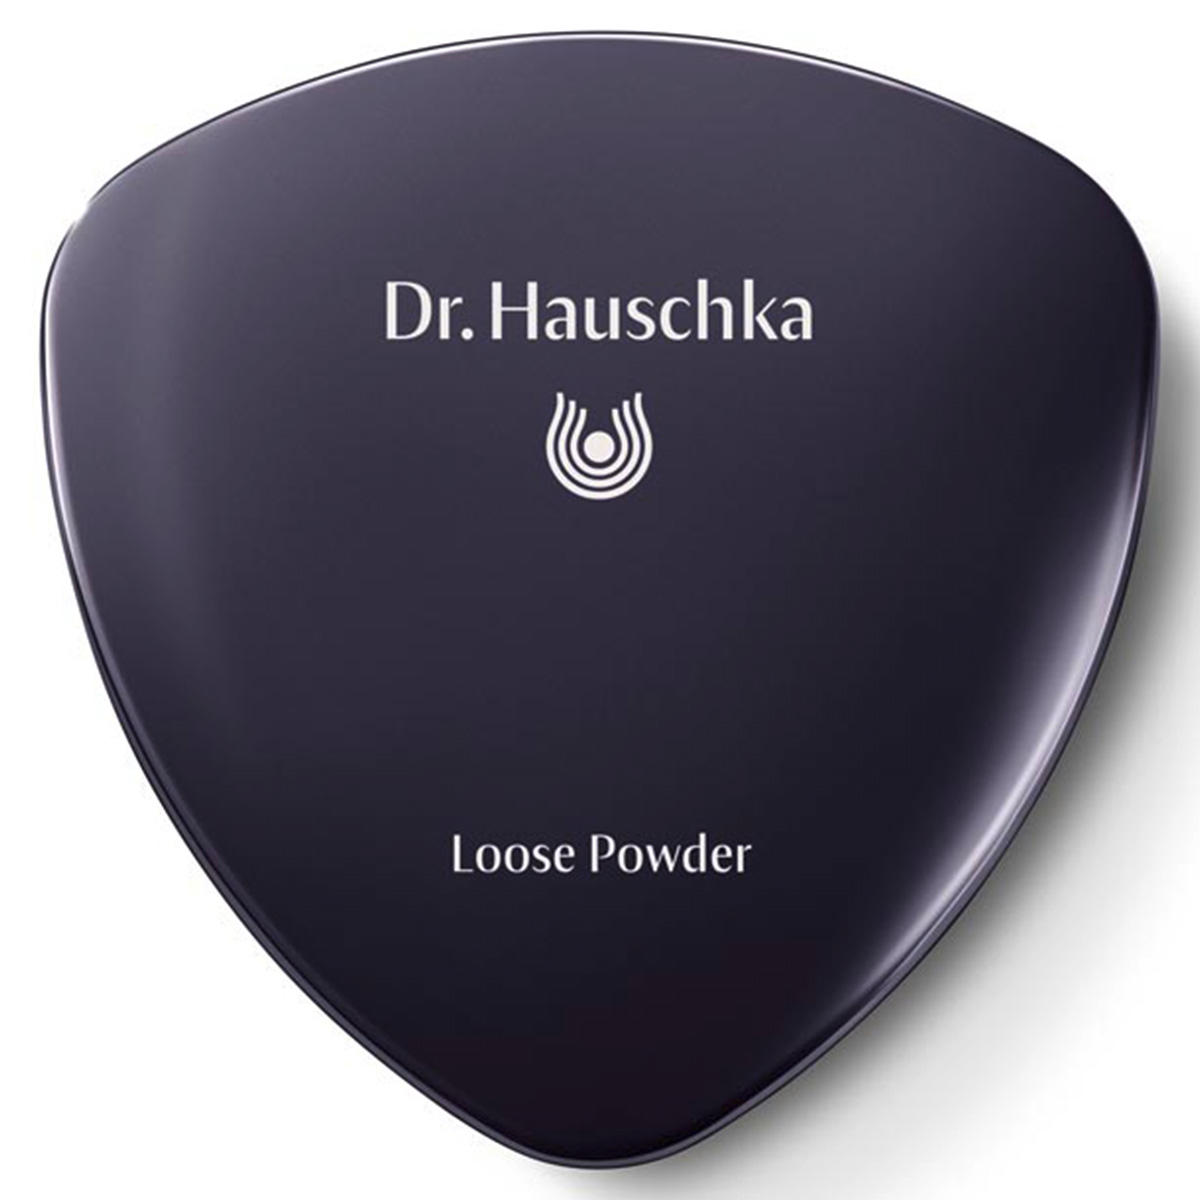 Dr. Hauschka Loose Powder 00 translucide, contenu 12 g - 3